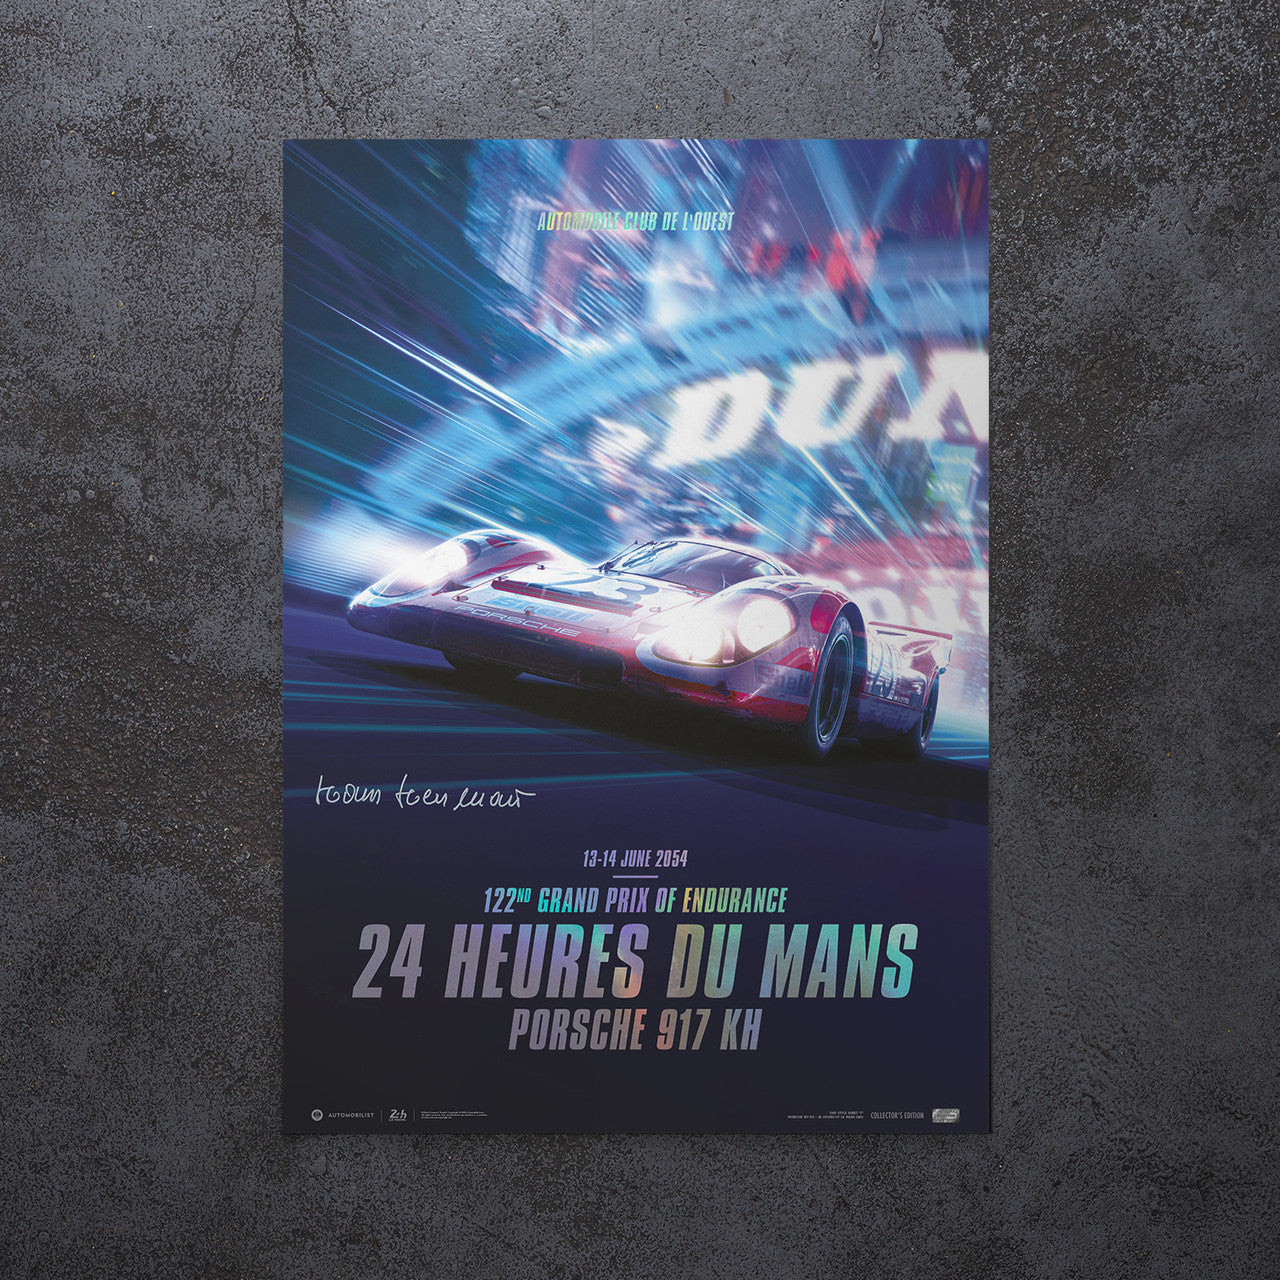 HANS HERRMANN - PORSCHE 917 KH AT 24H LE MANS - 2054 | SIGNED COLLECTOR'S EDITION